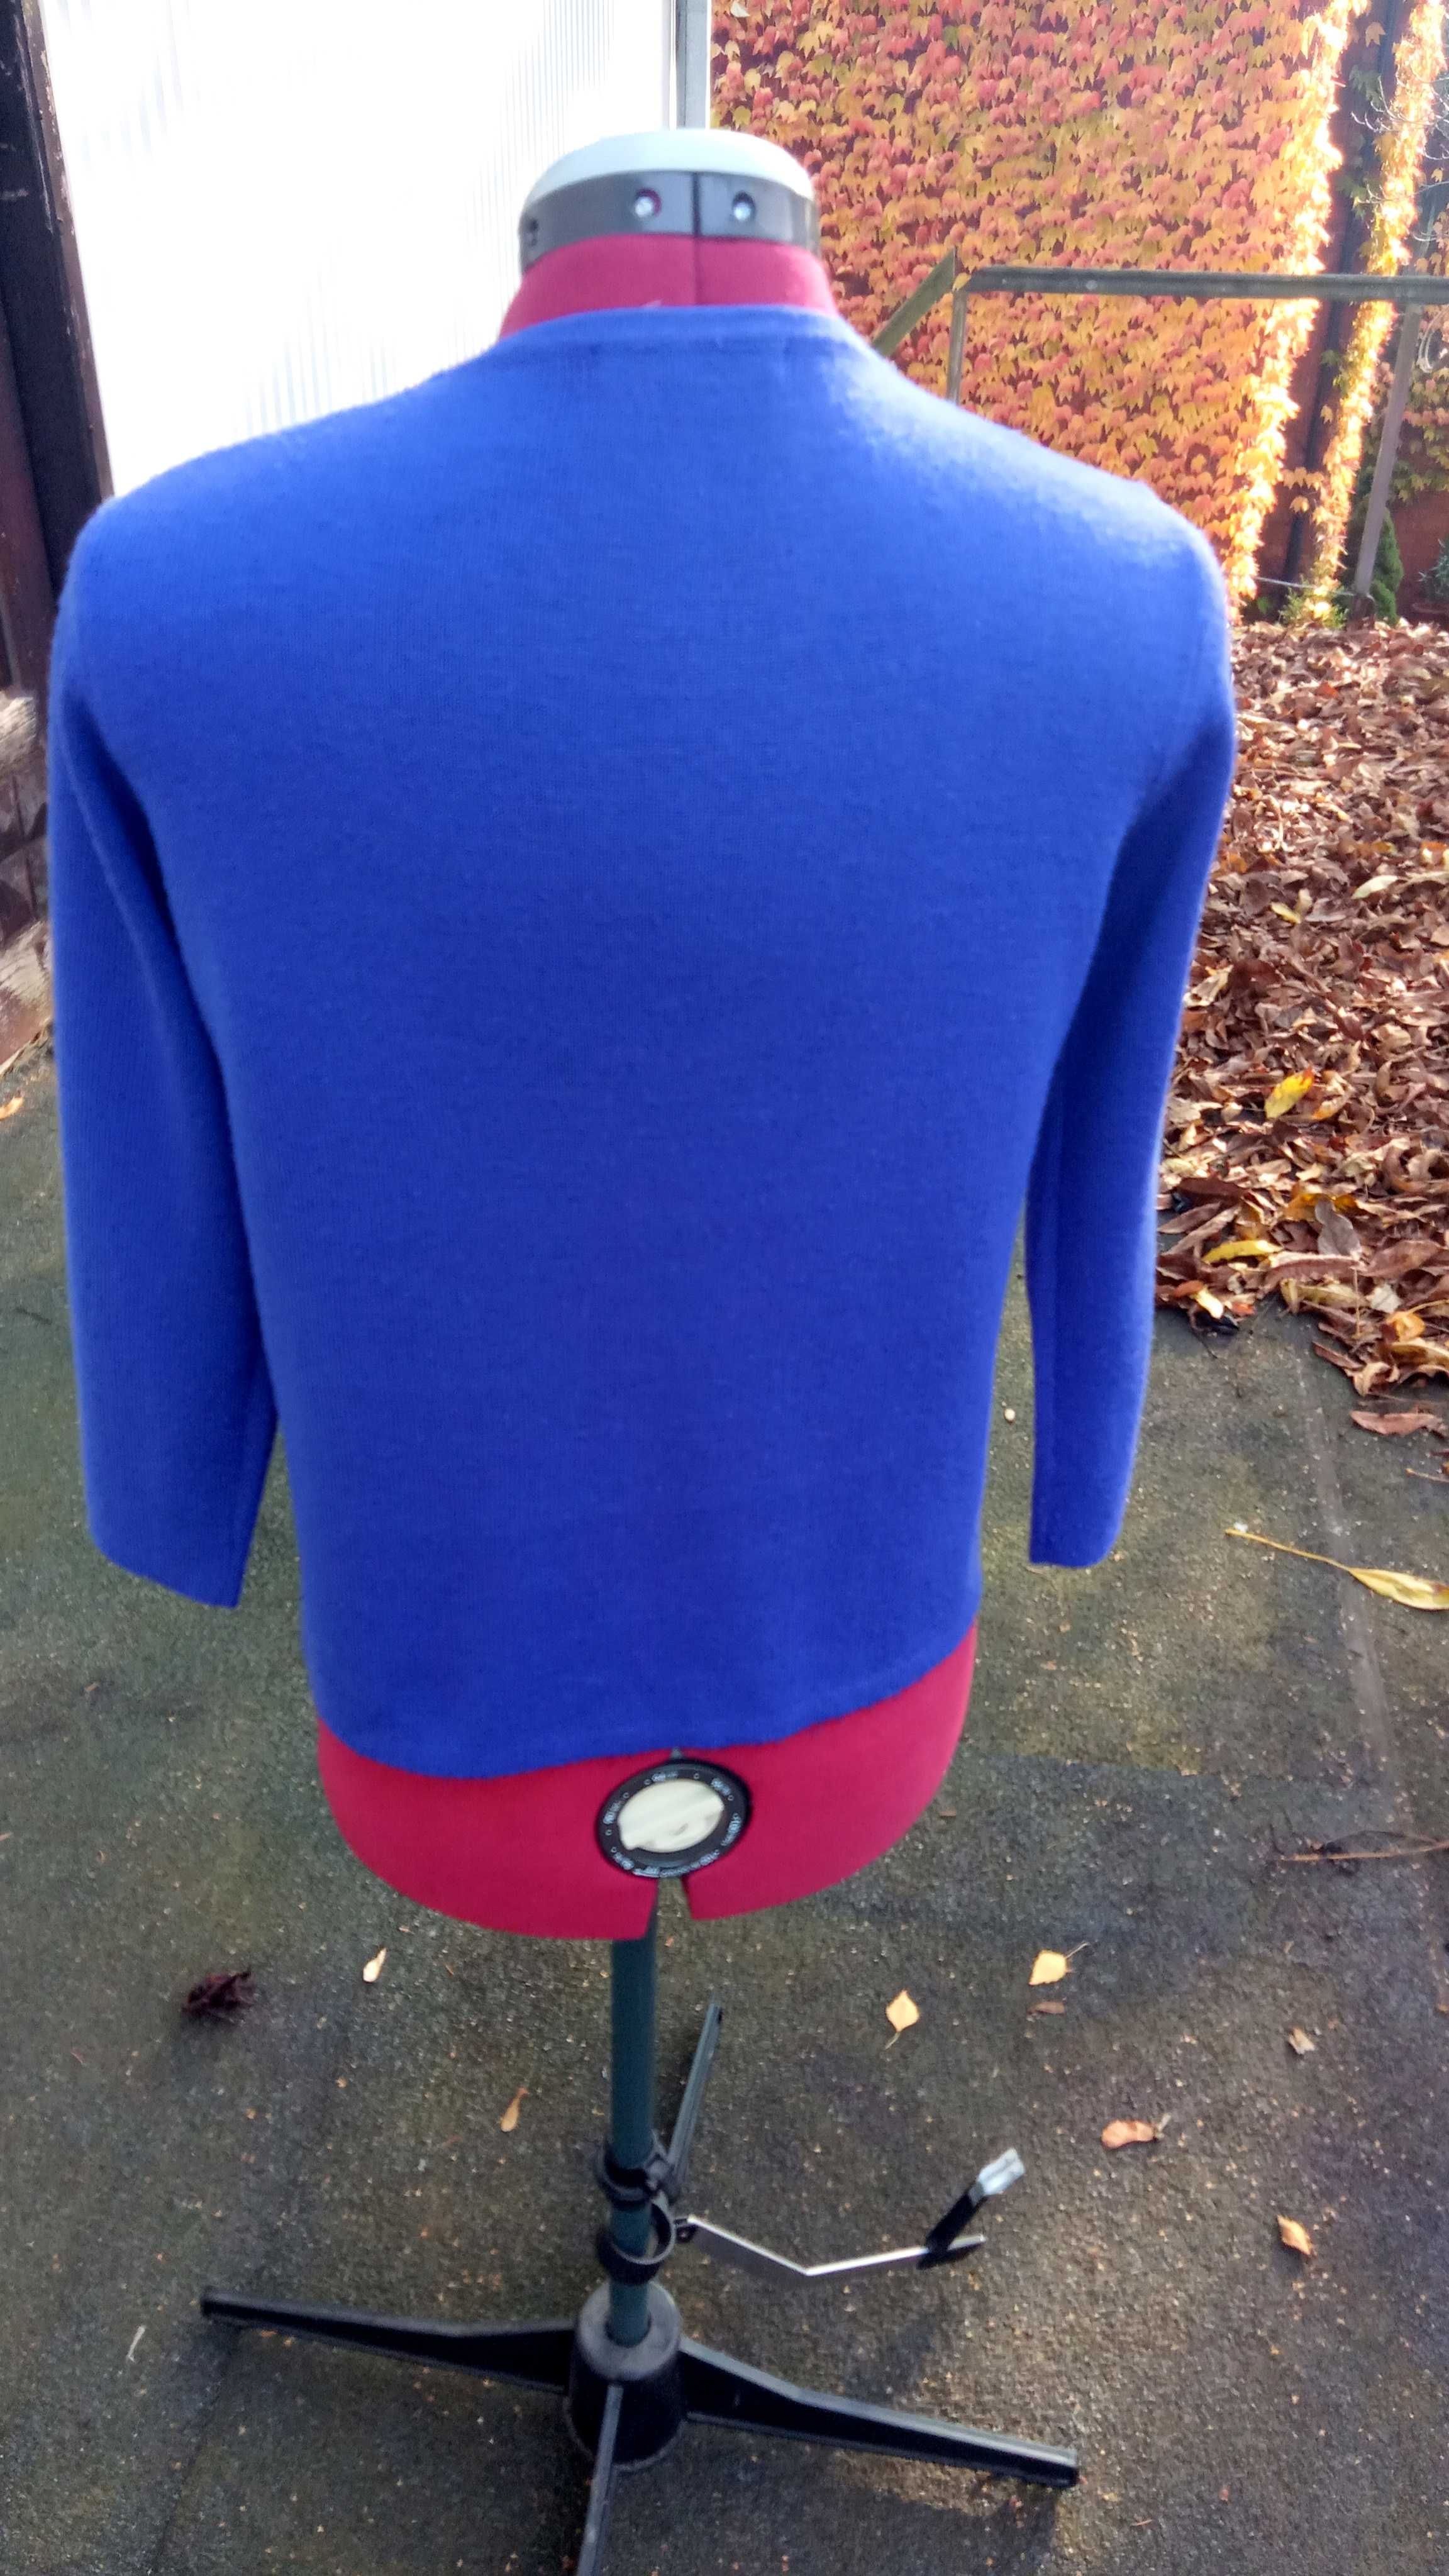 Kardigan Marks & Spencer - kobaltowy sweterek rozpinany